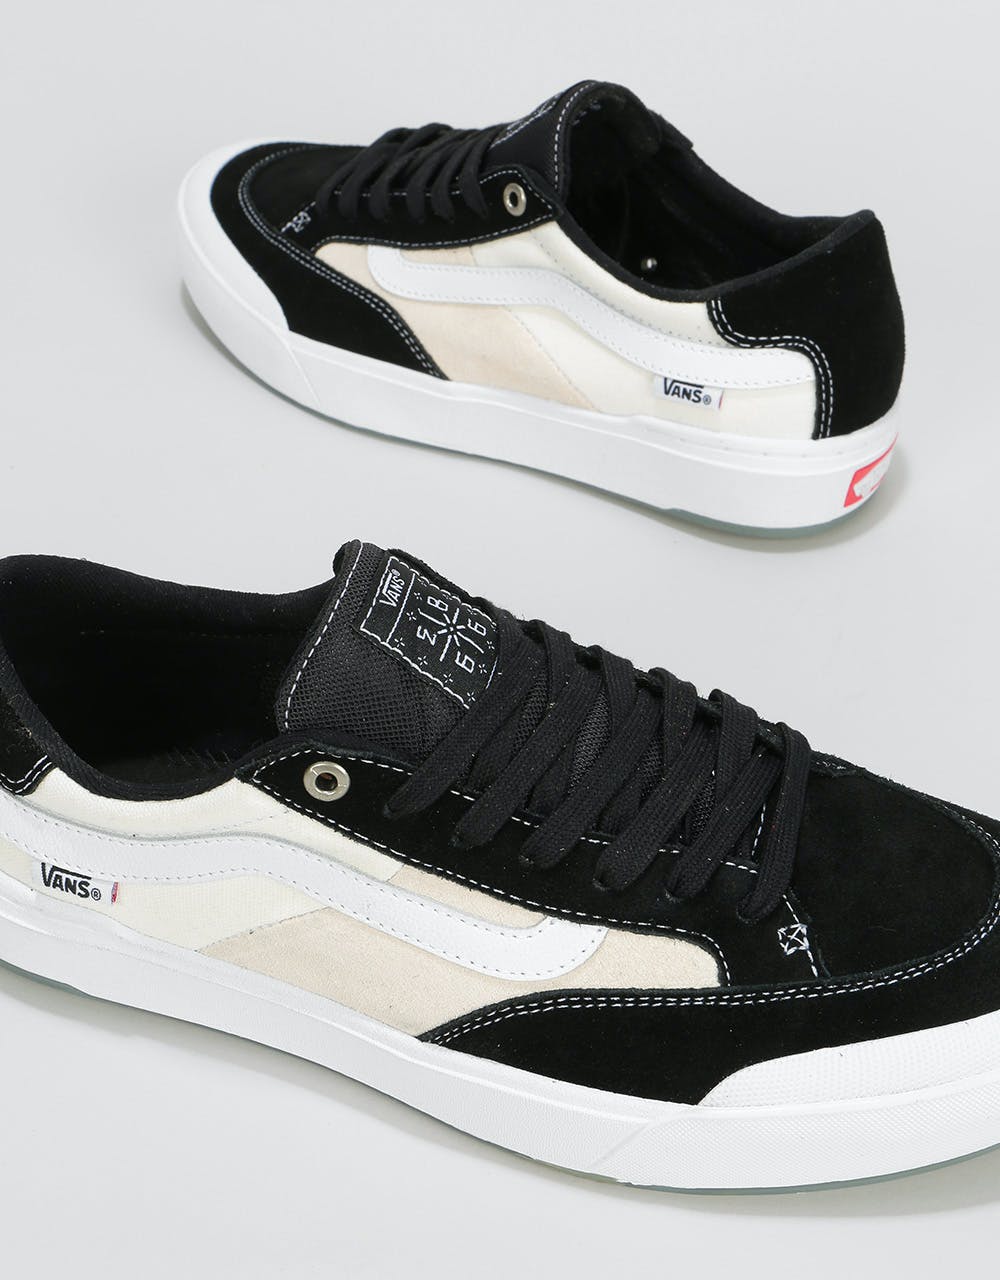 Vans Berle Pro Skate Shoes - Black/White